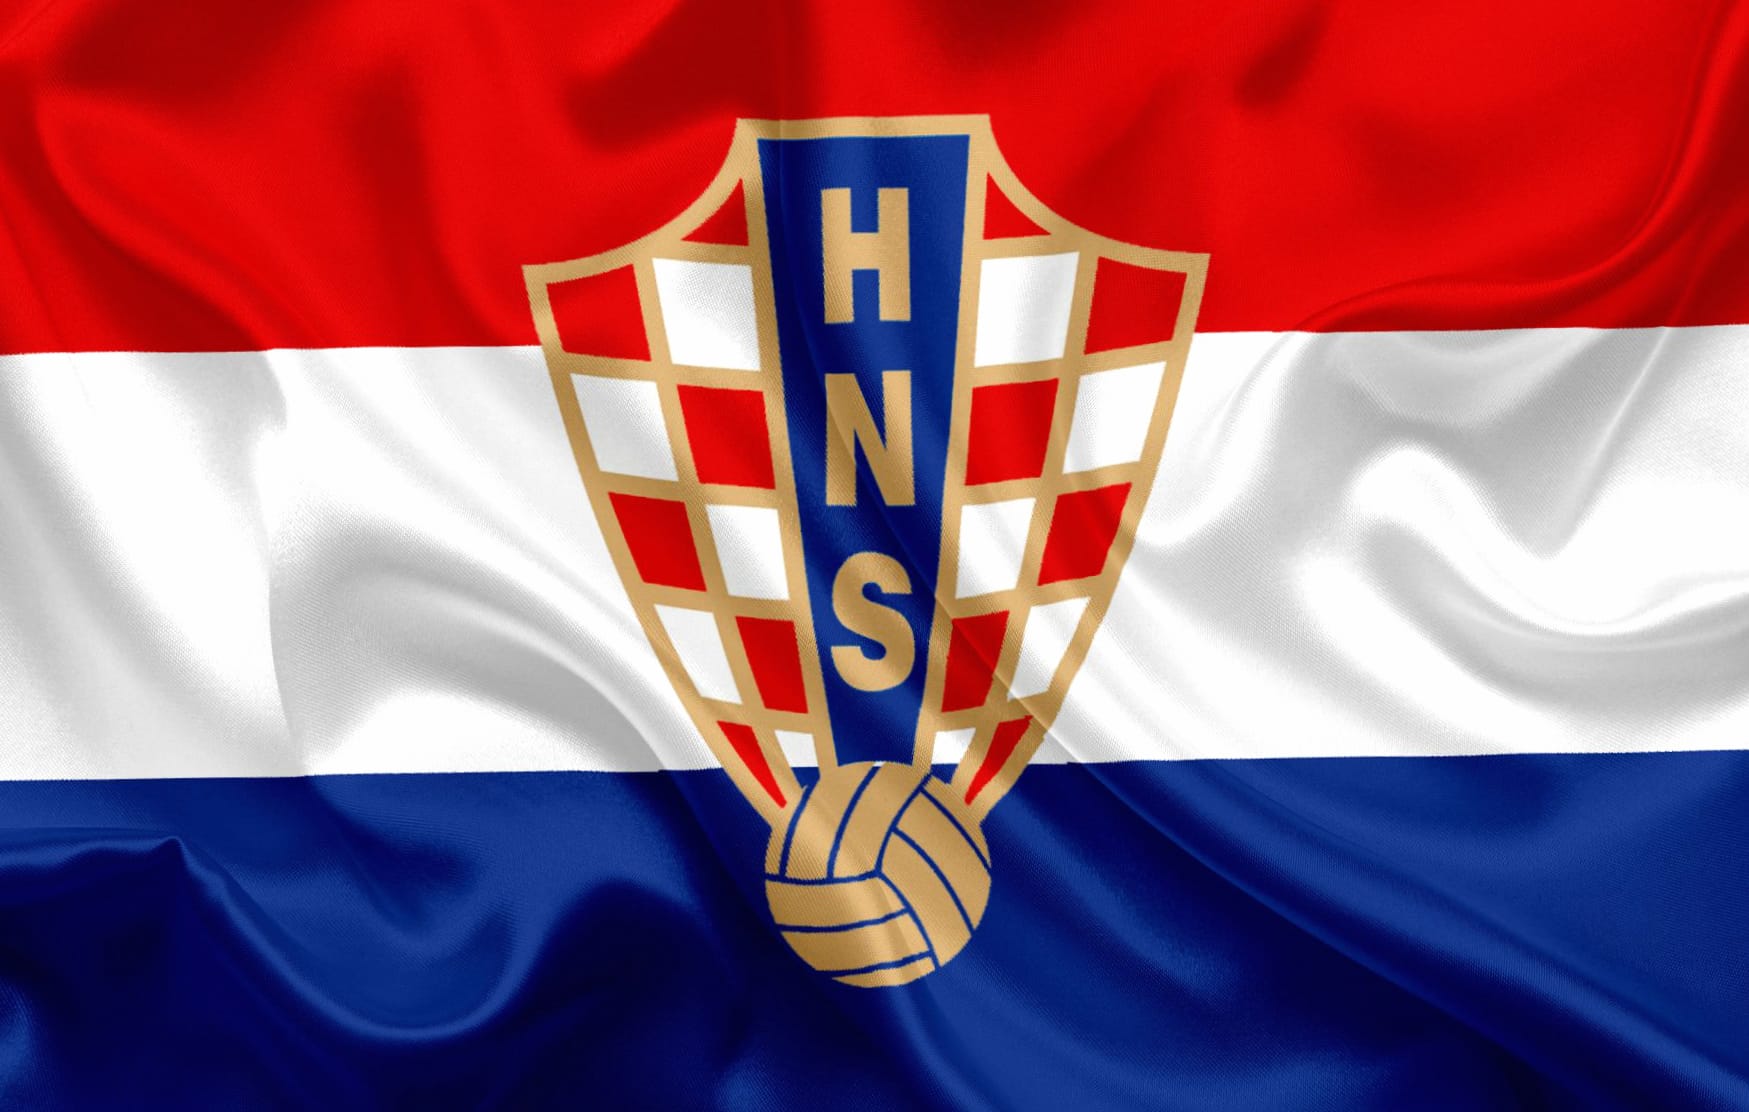 Croatia National Football Team at 1024 x 1024 iPad size wallpapers HD quality